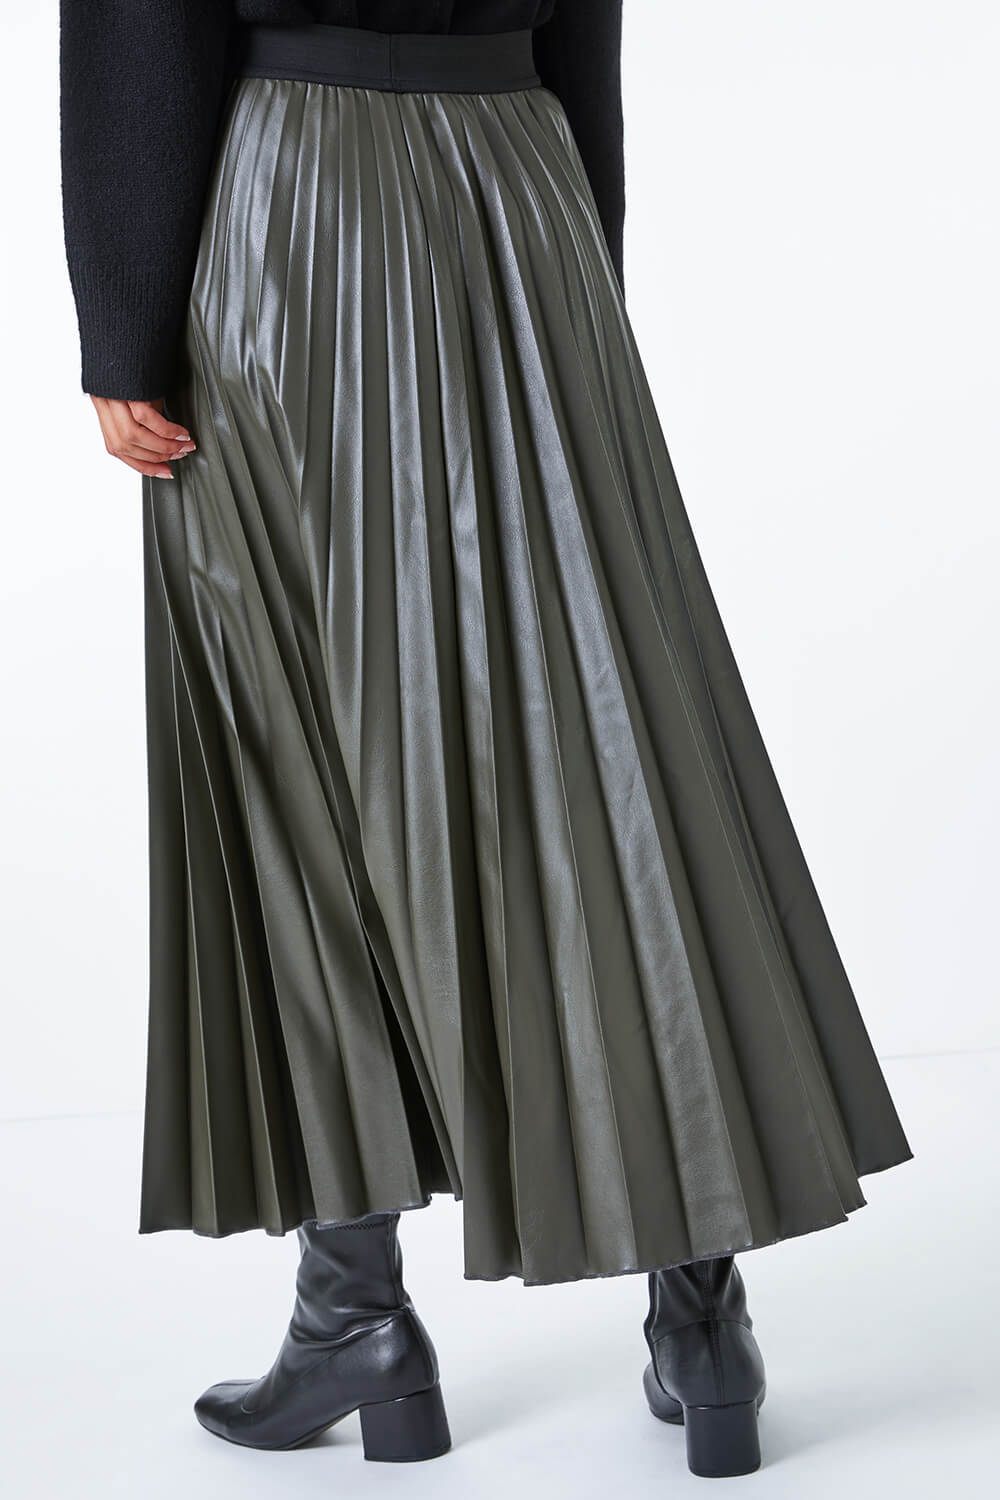 KHAKI Faux Leather Pleated Maxi Skirt , Image 4 of 5